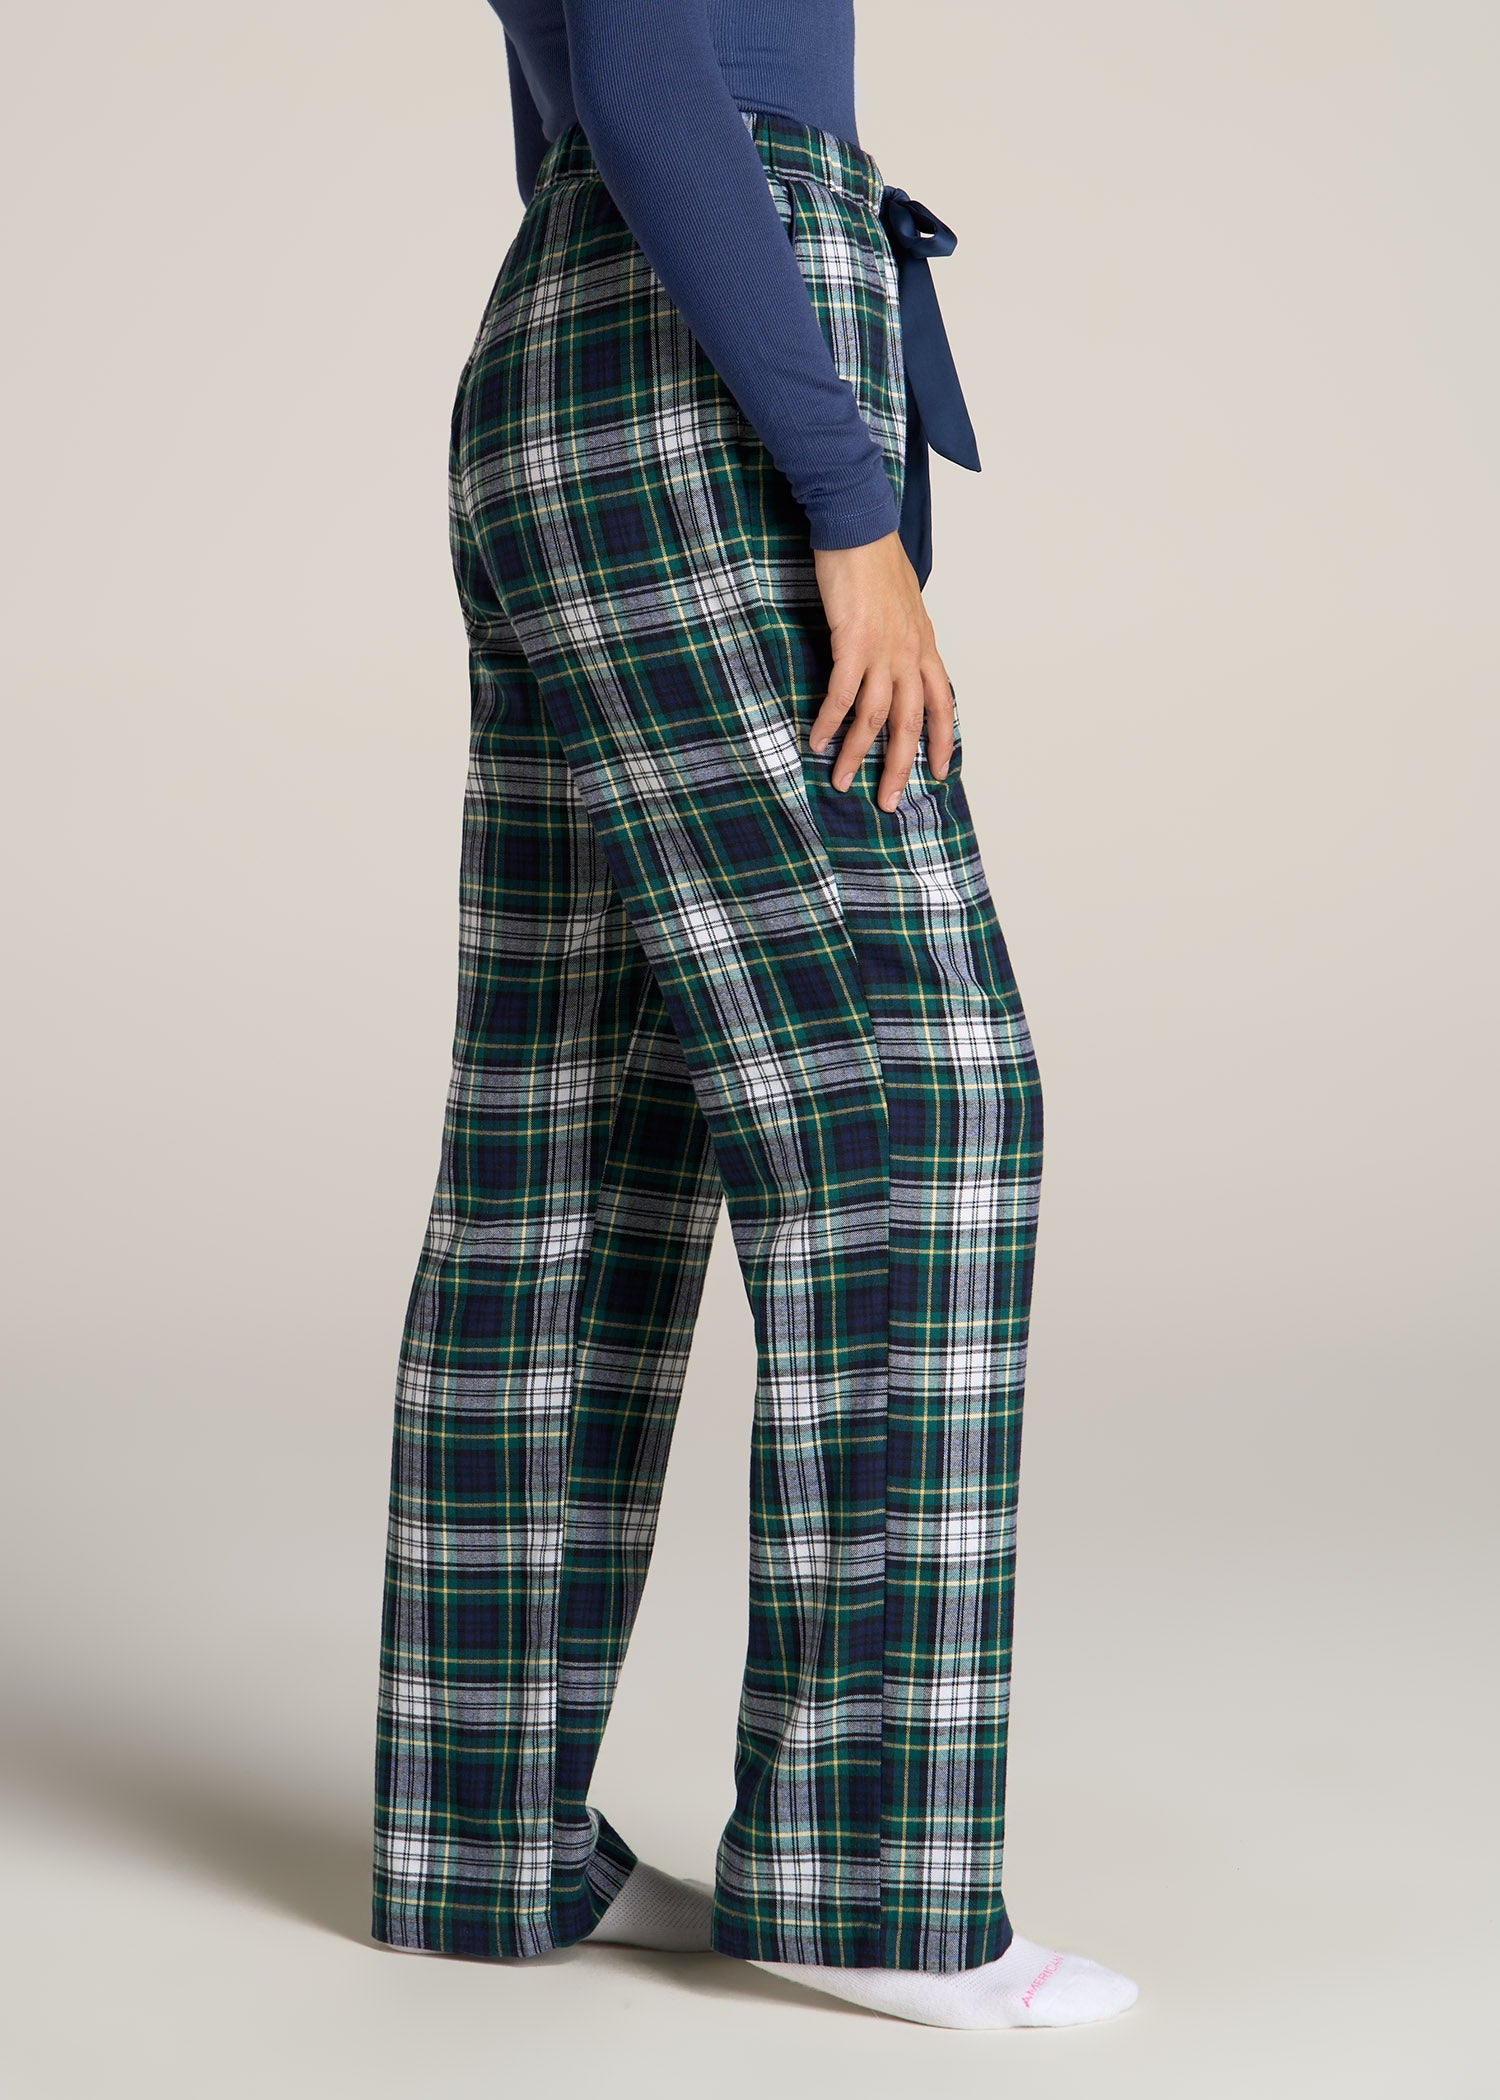 Aerie Women's Flannel Pajama Shirt, Lounge Tops